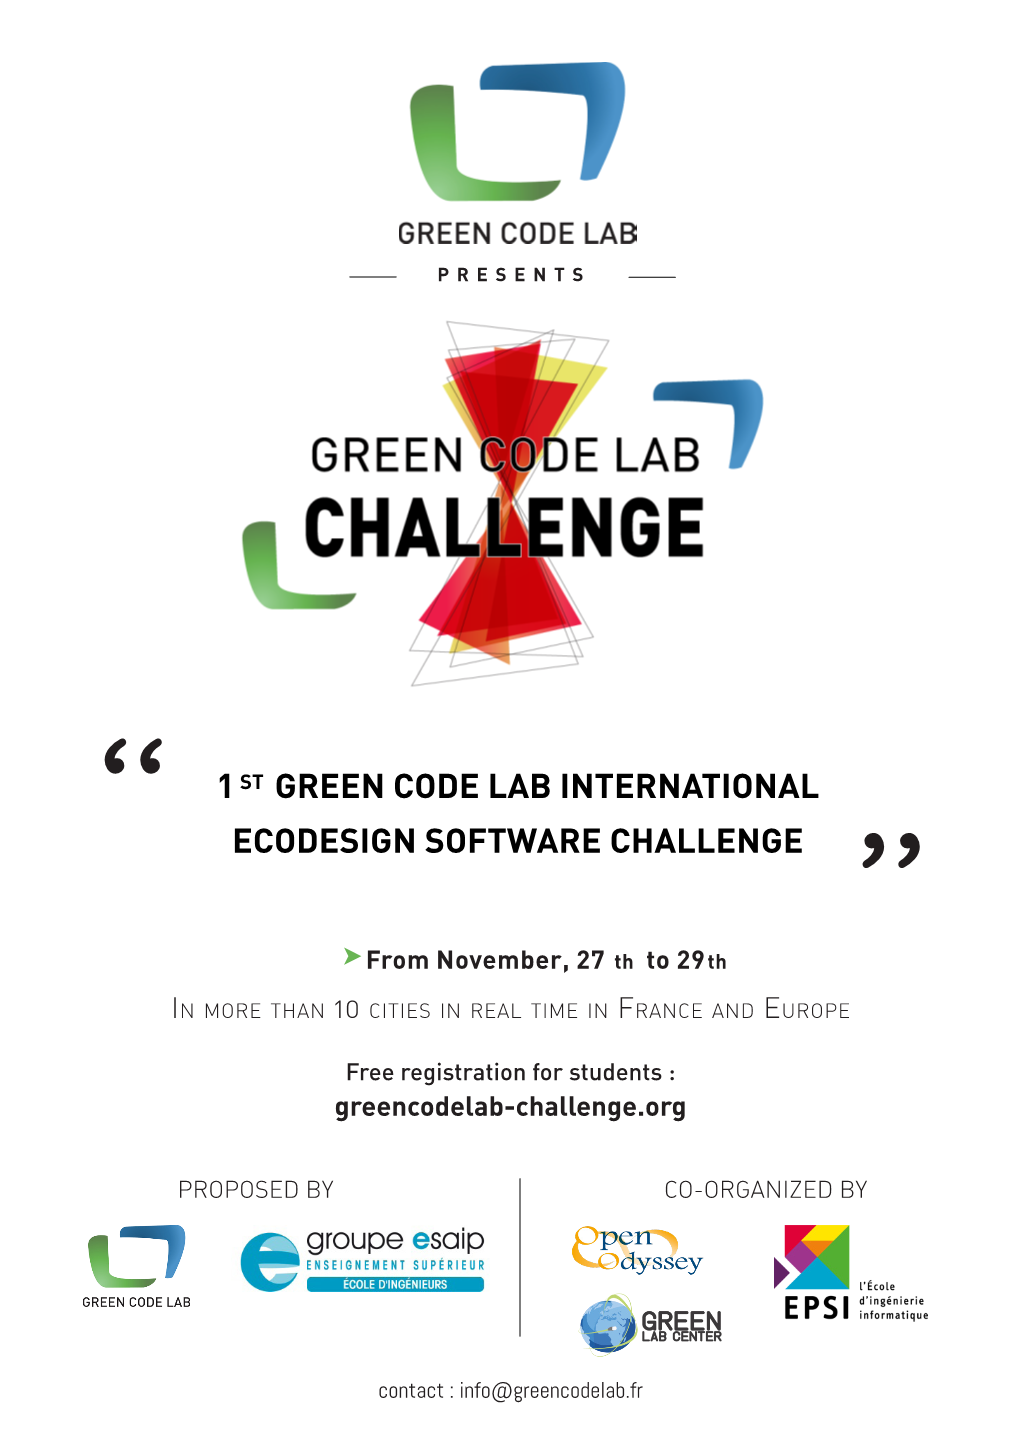 1 Green Code Lab International Ecodesign Software Challenge